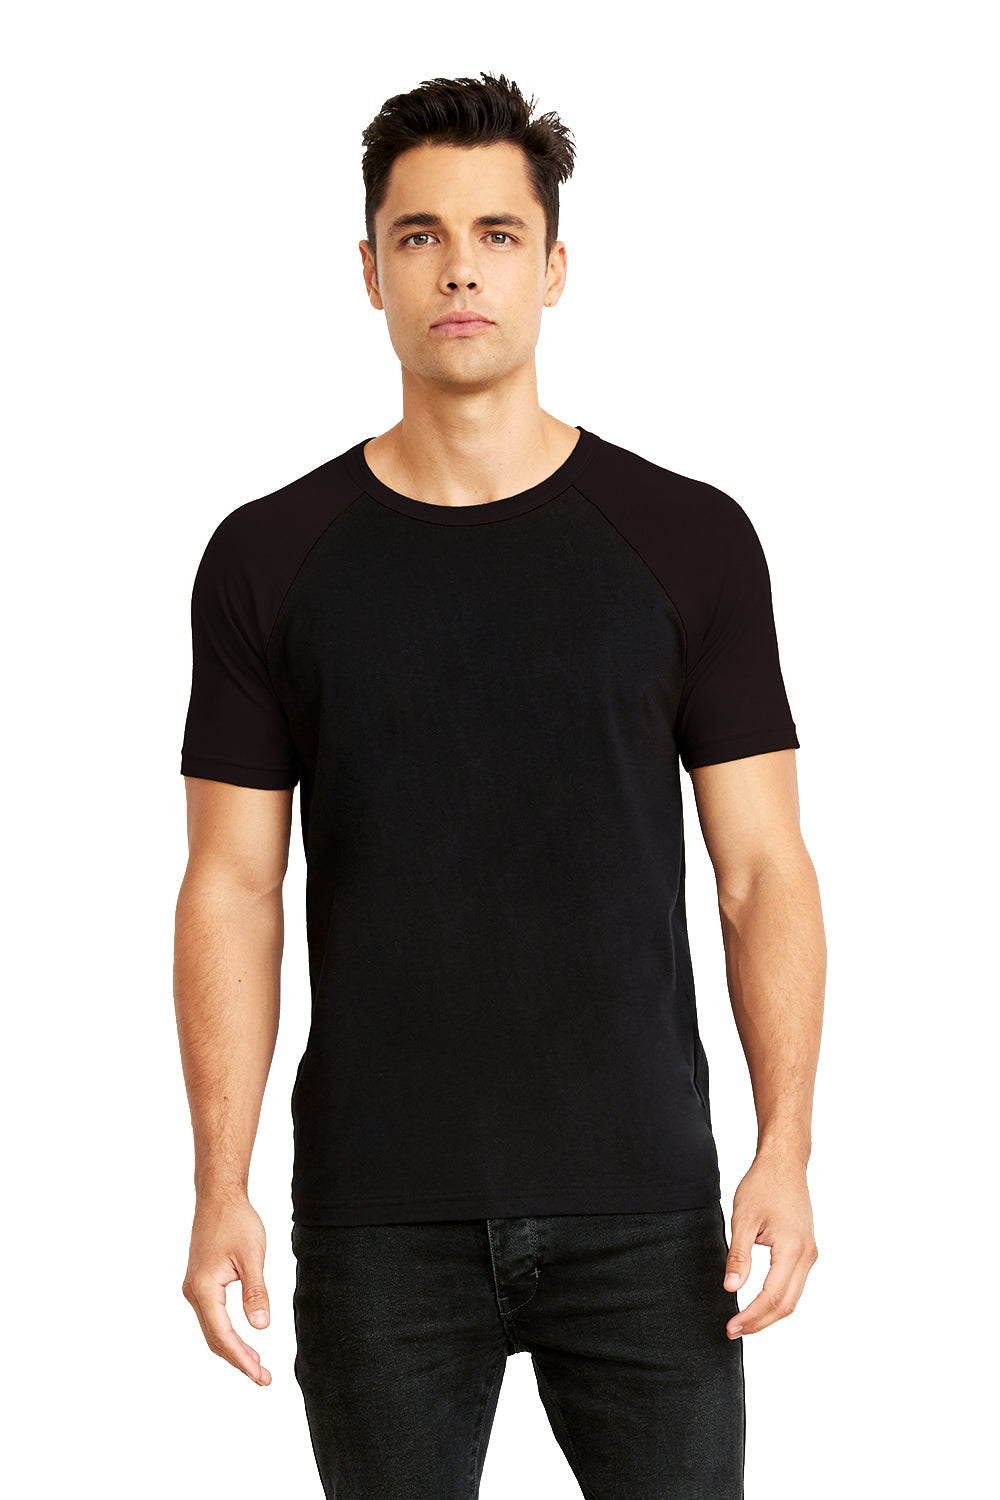 Next Level N3650 Mens Fine Jersey Short Sleeve Crewneck T-Shirt Black Front